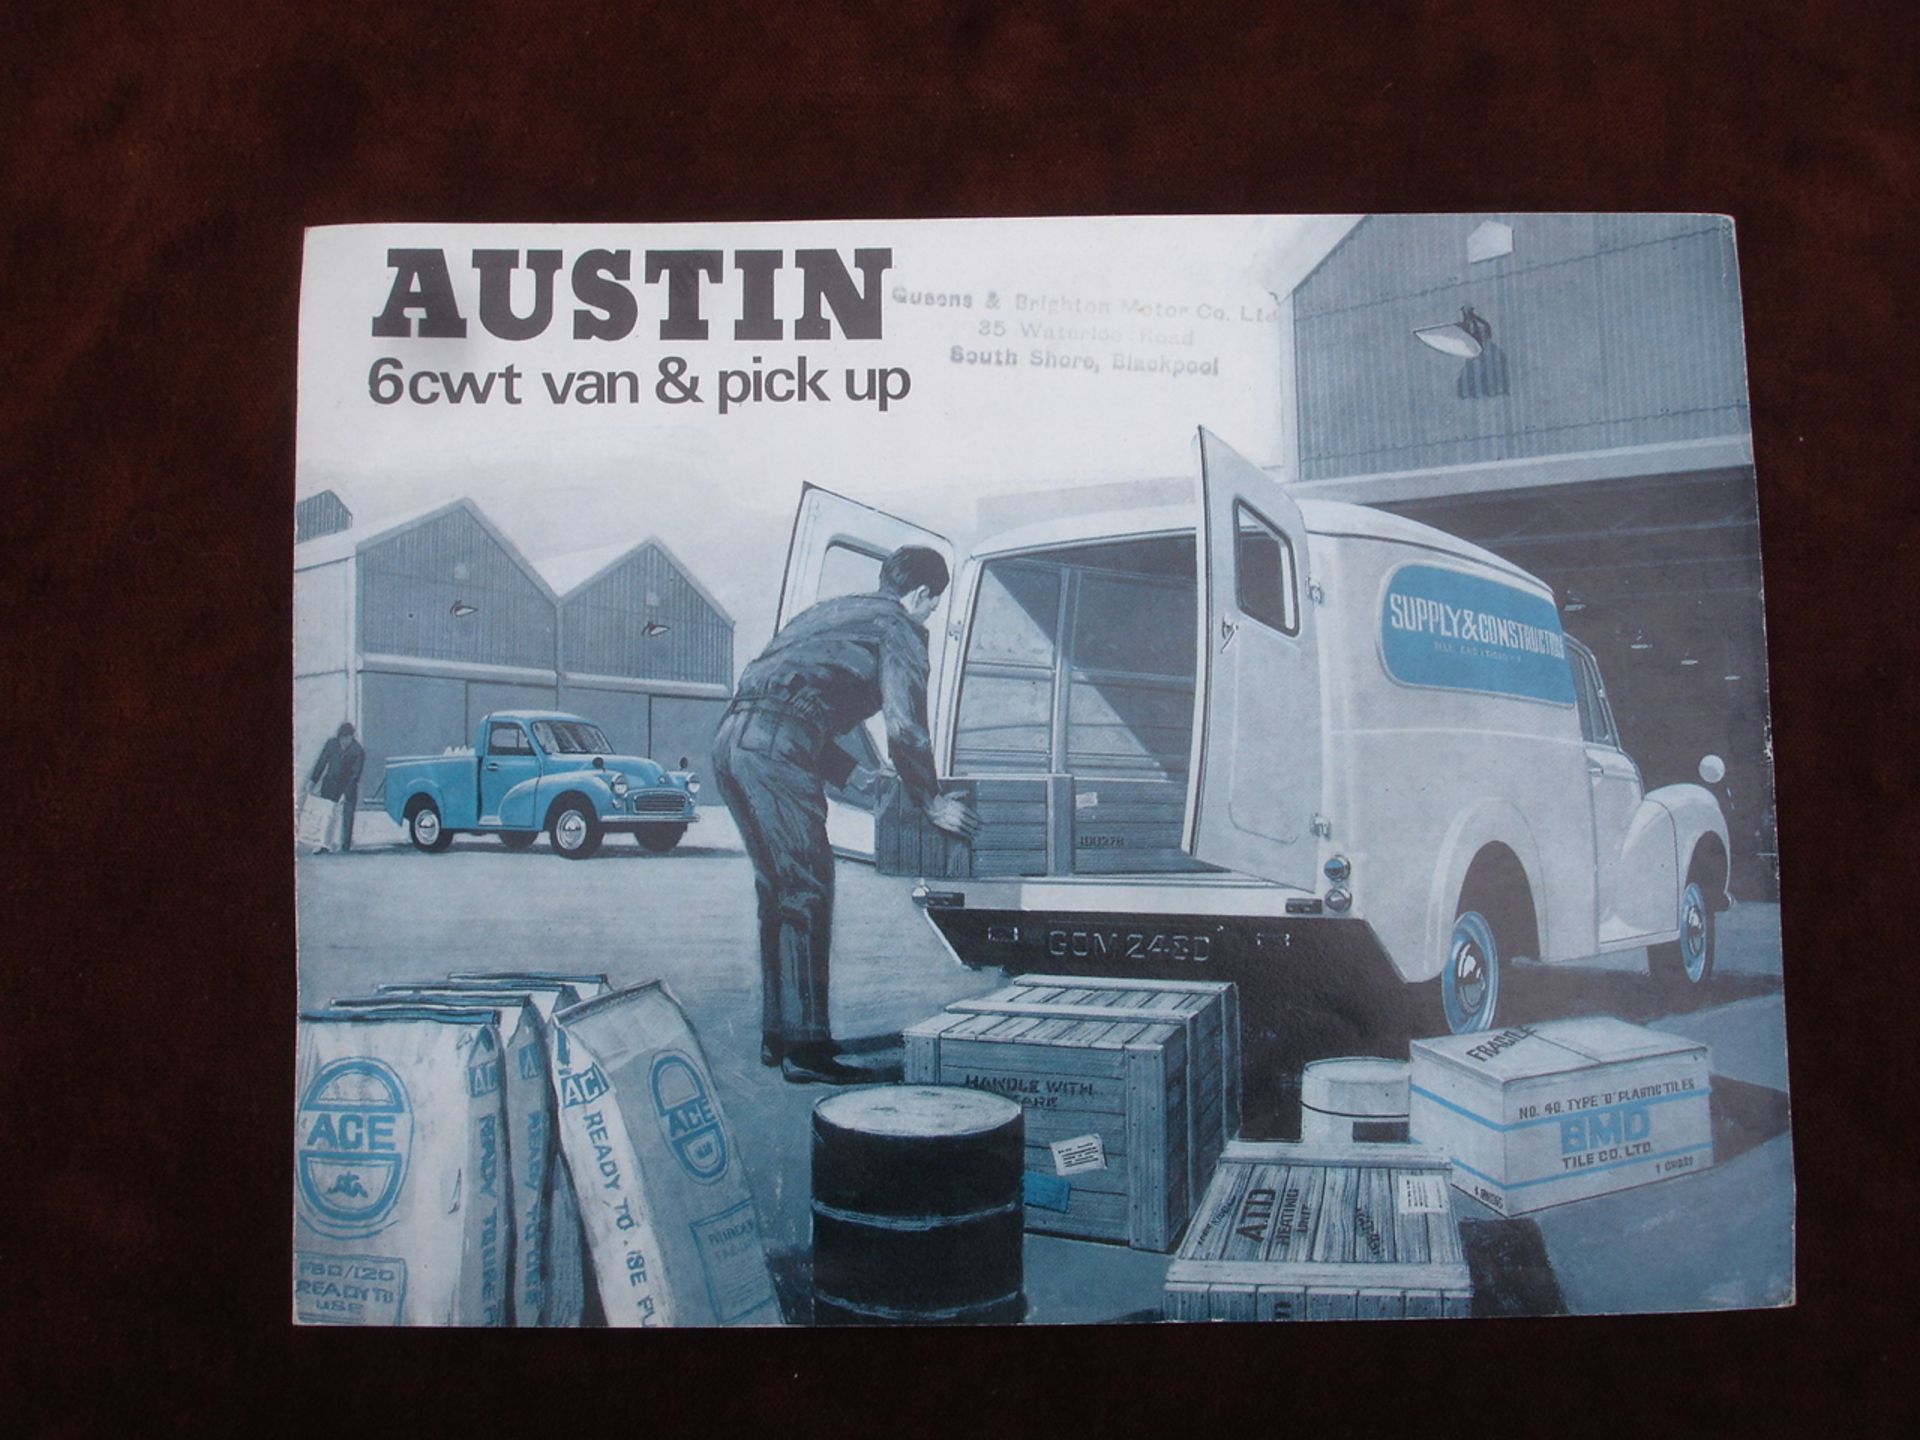 Morris Minor brochure for the rare Austin badged 6 cwt van/pickup with dealership stamp